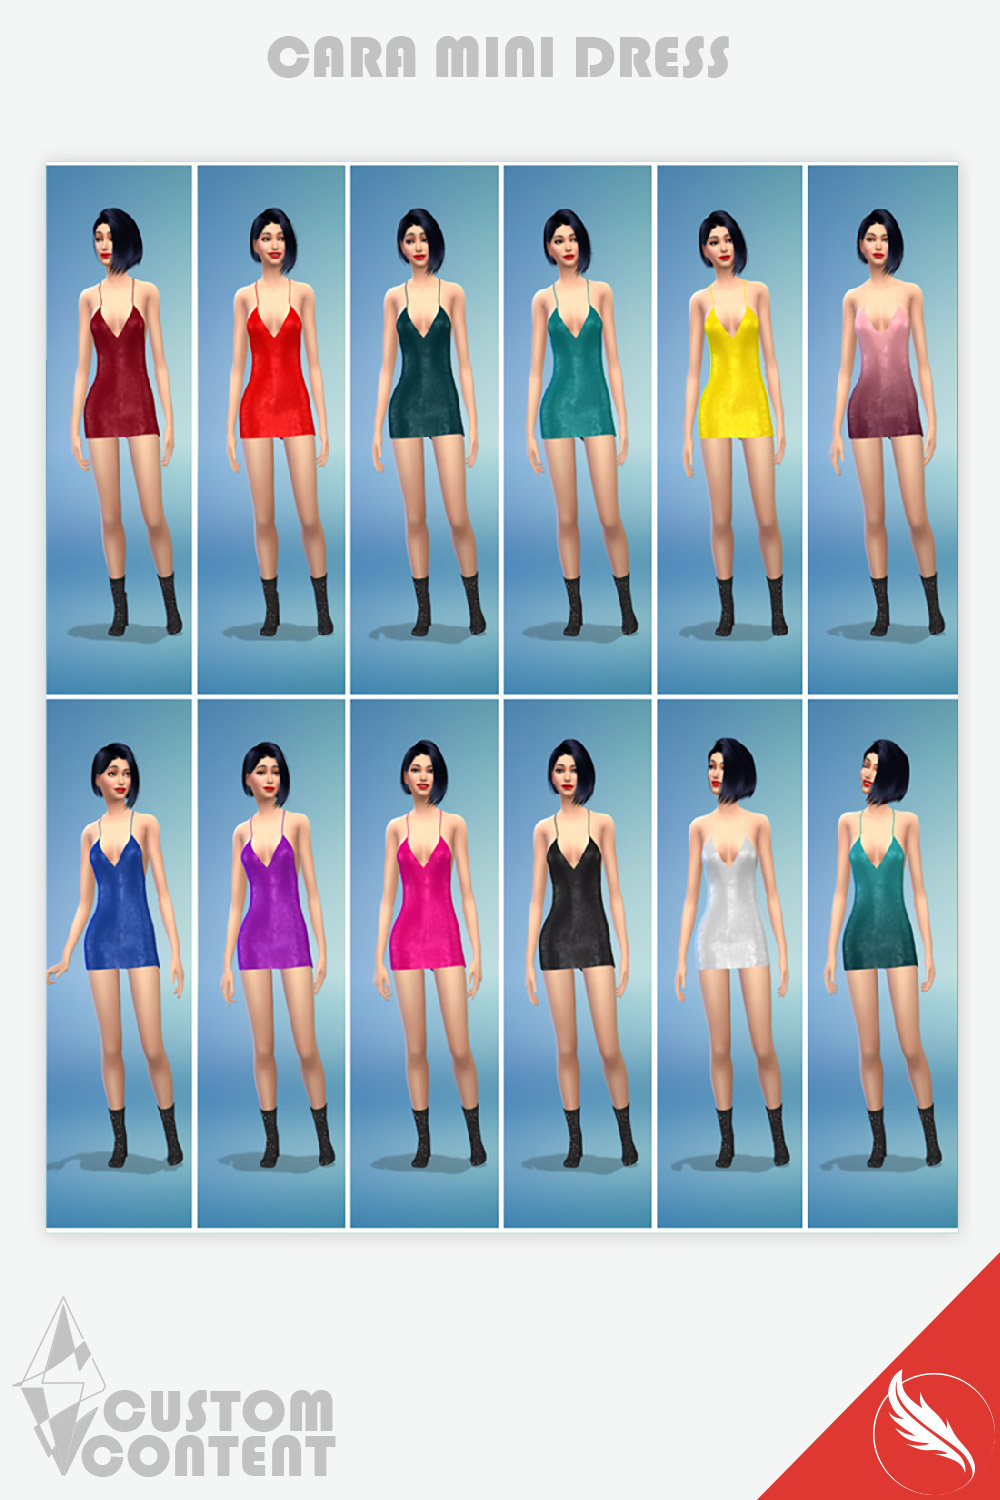 The Sims 4 Mini Dress Party CC